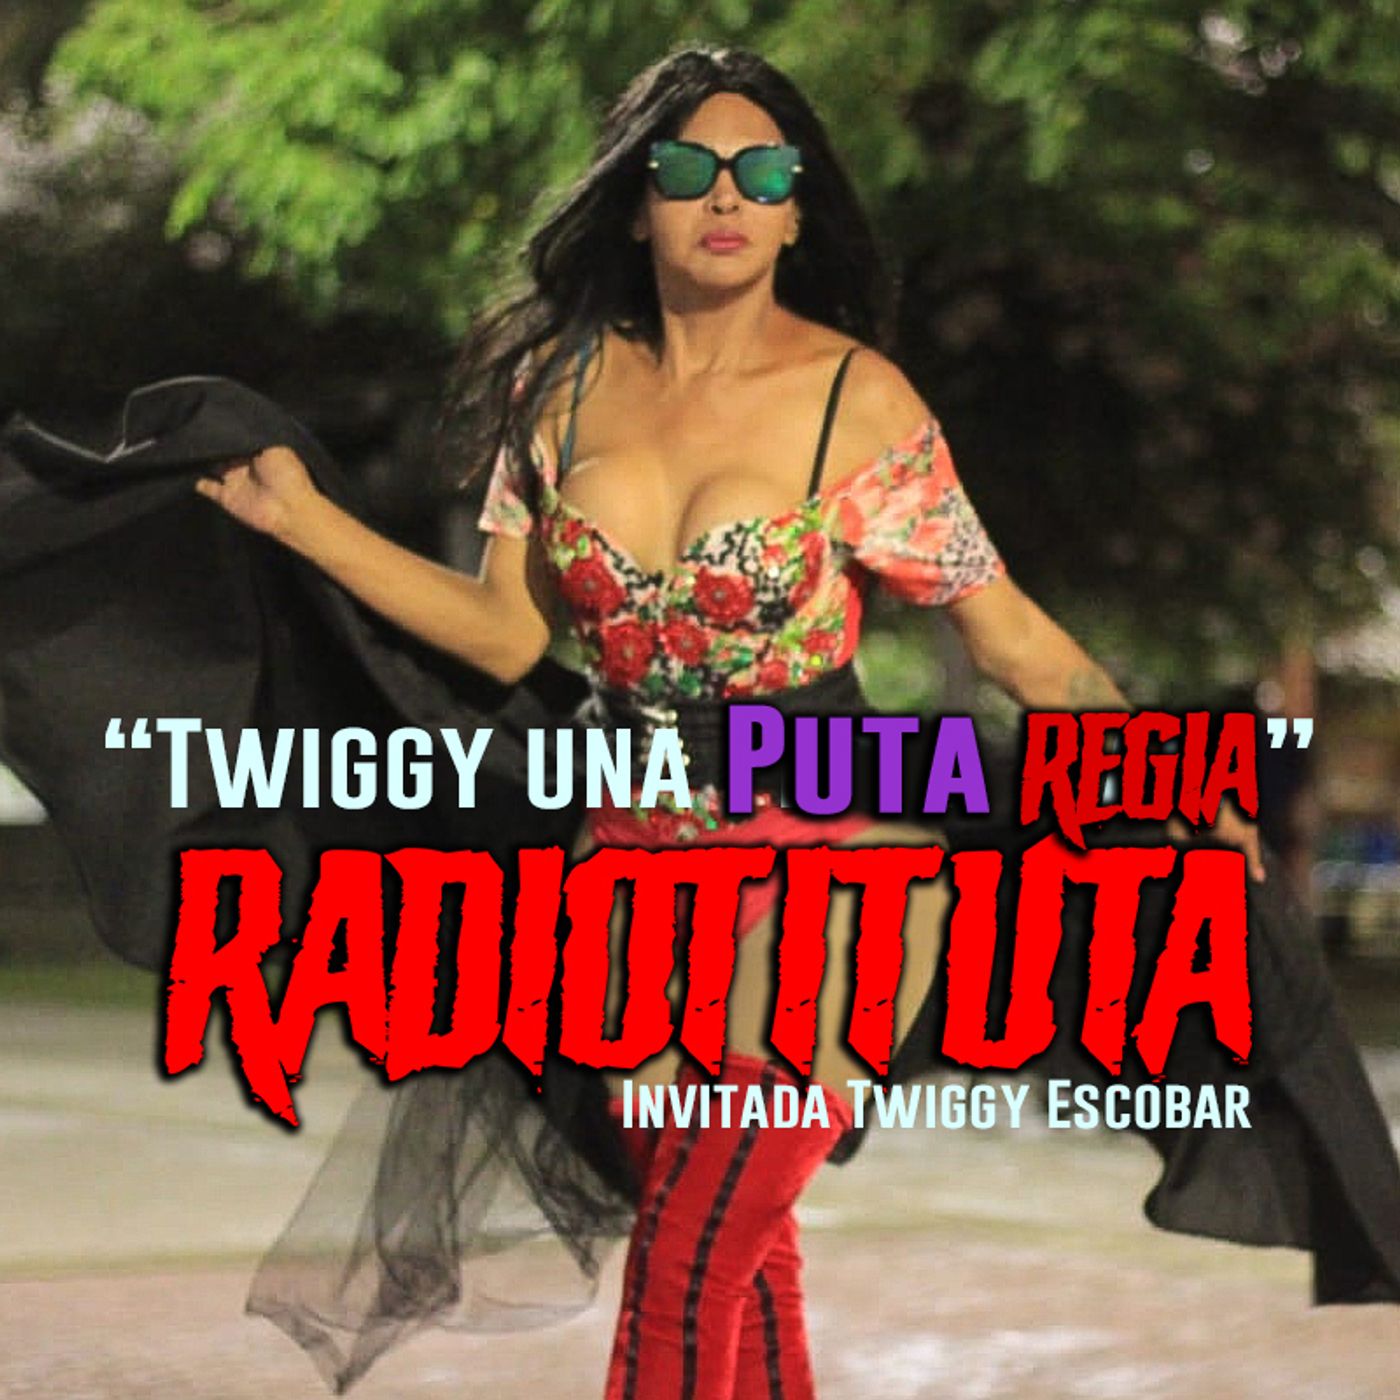 EP 15 Twiggy una Pvt4 Regia | Invitada Especial Twiggy Escobar